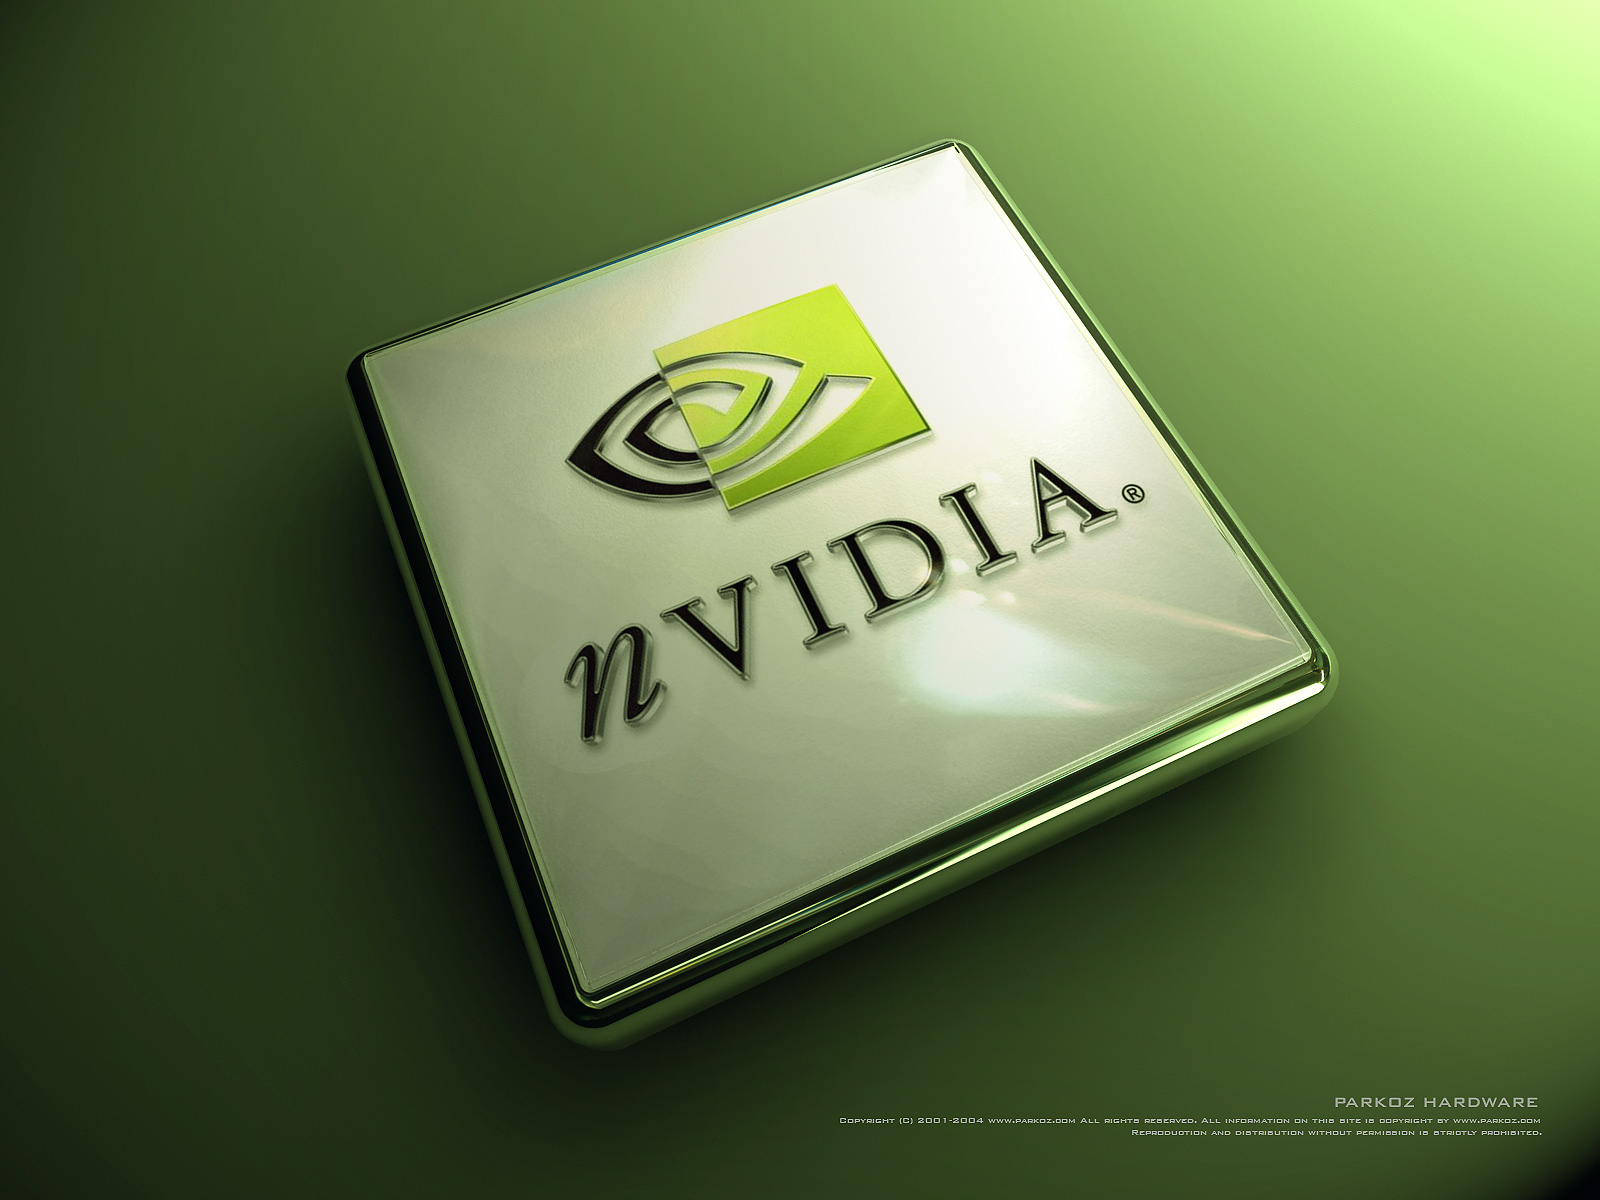 Technology Nvidia HD Wallpaper | Background Image